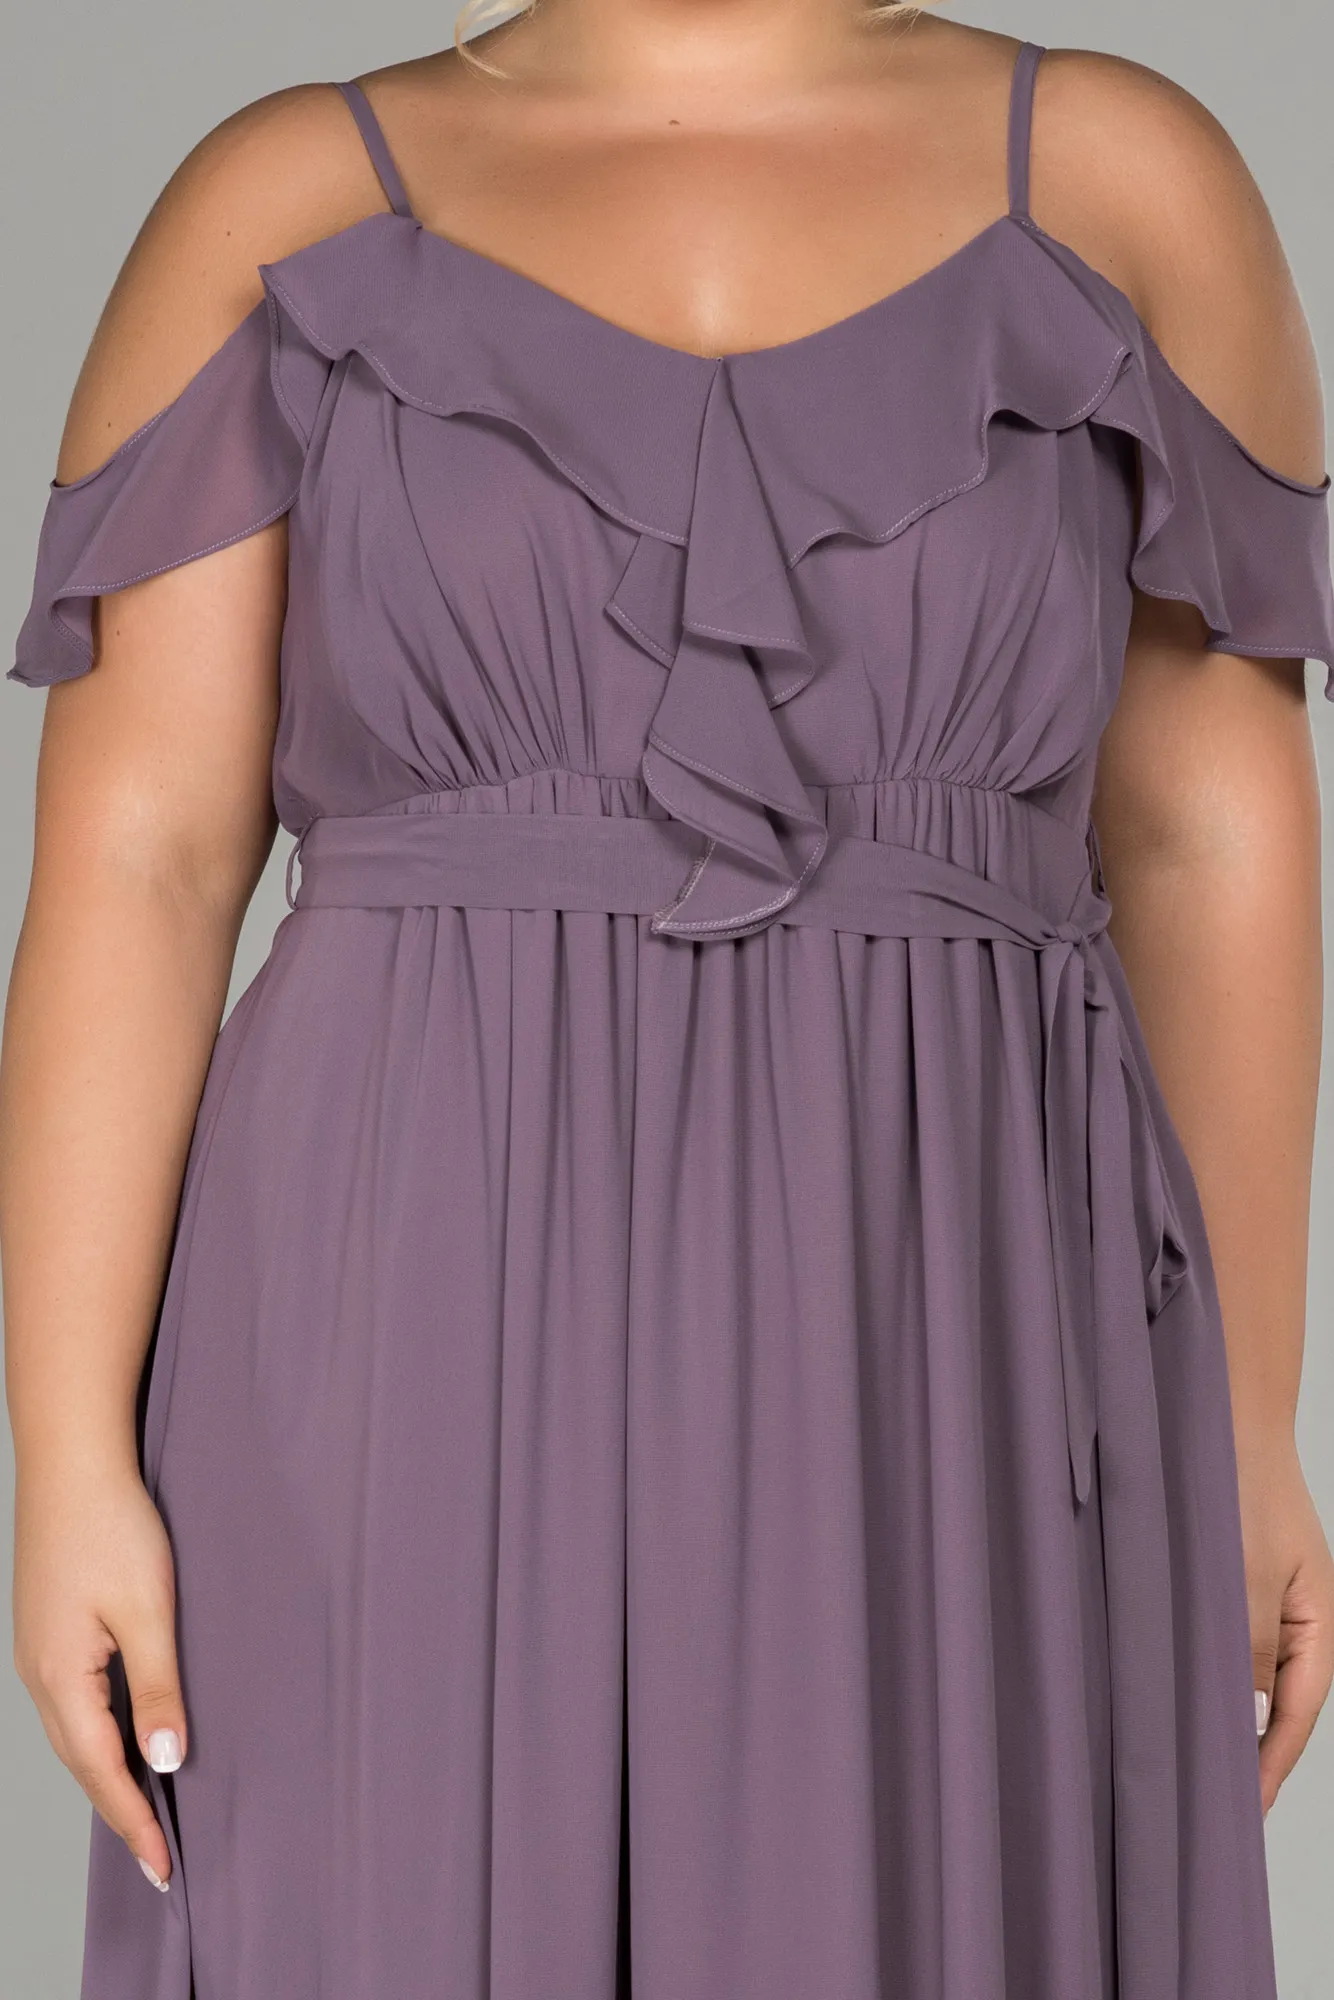 Lavender-Long Plus Size Evening Dress ABU1449